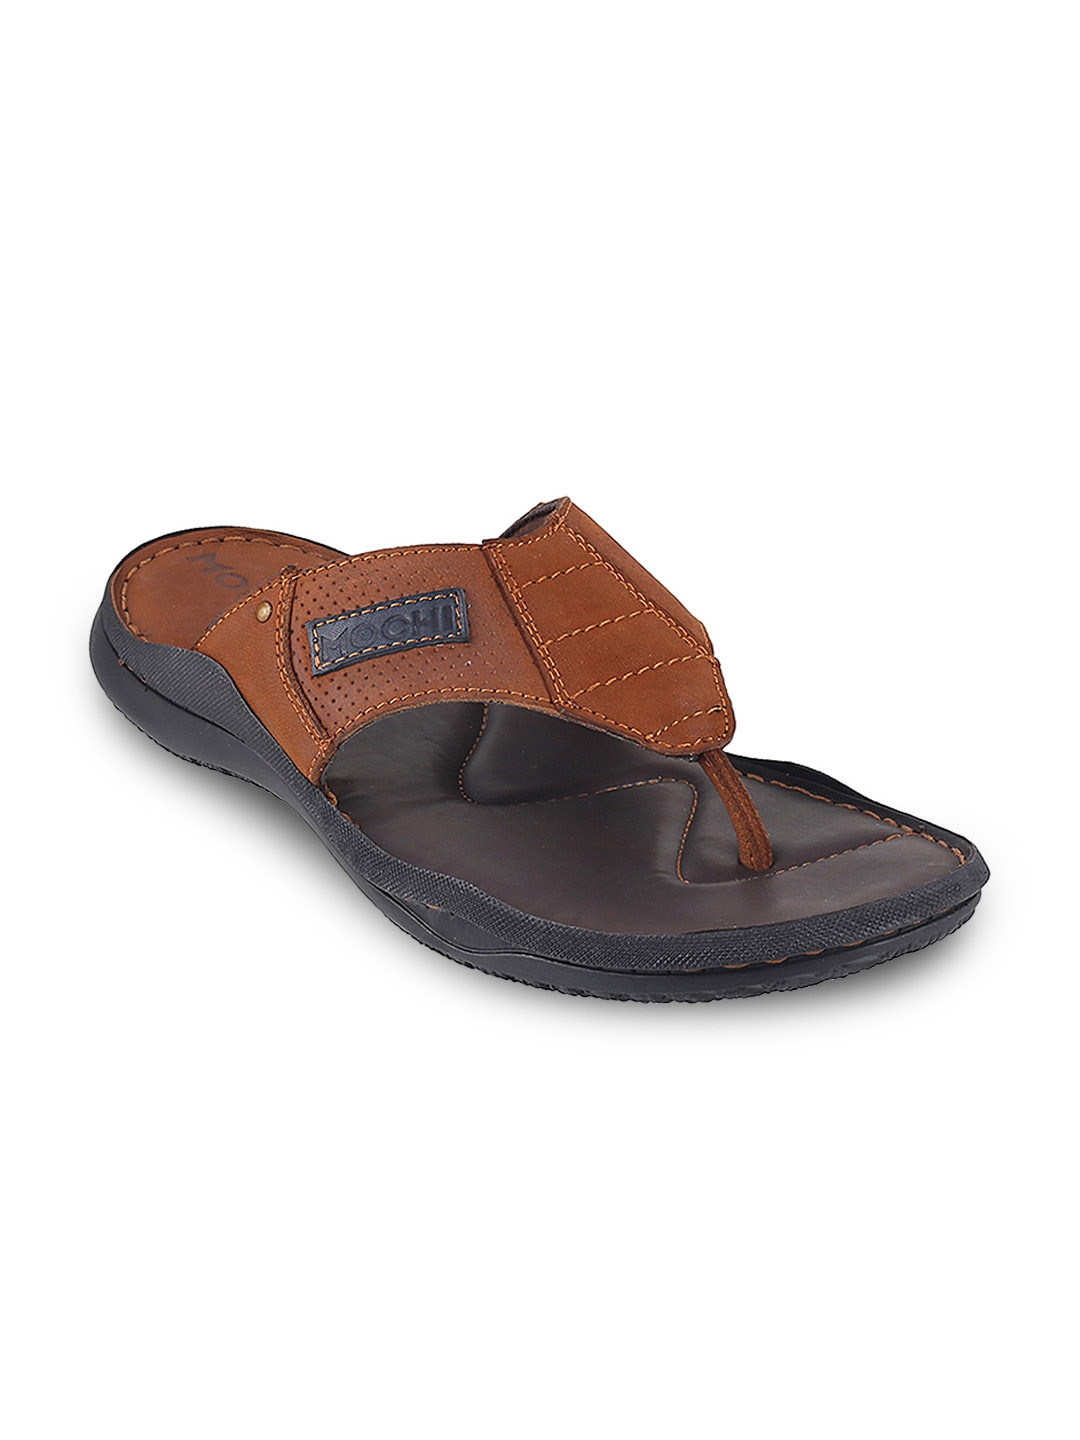 Mochi Men Brown Leather Sandals 7-UK (41 EU) (18-9974) : Amazon.in: Fashion-hancorp34.com.vn